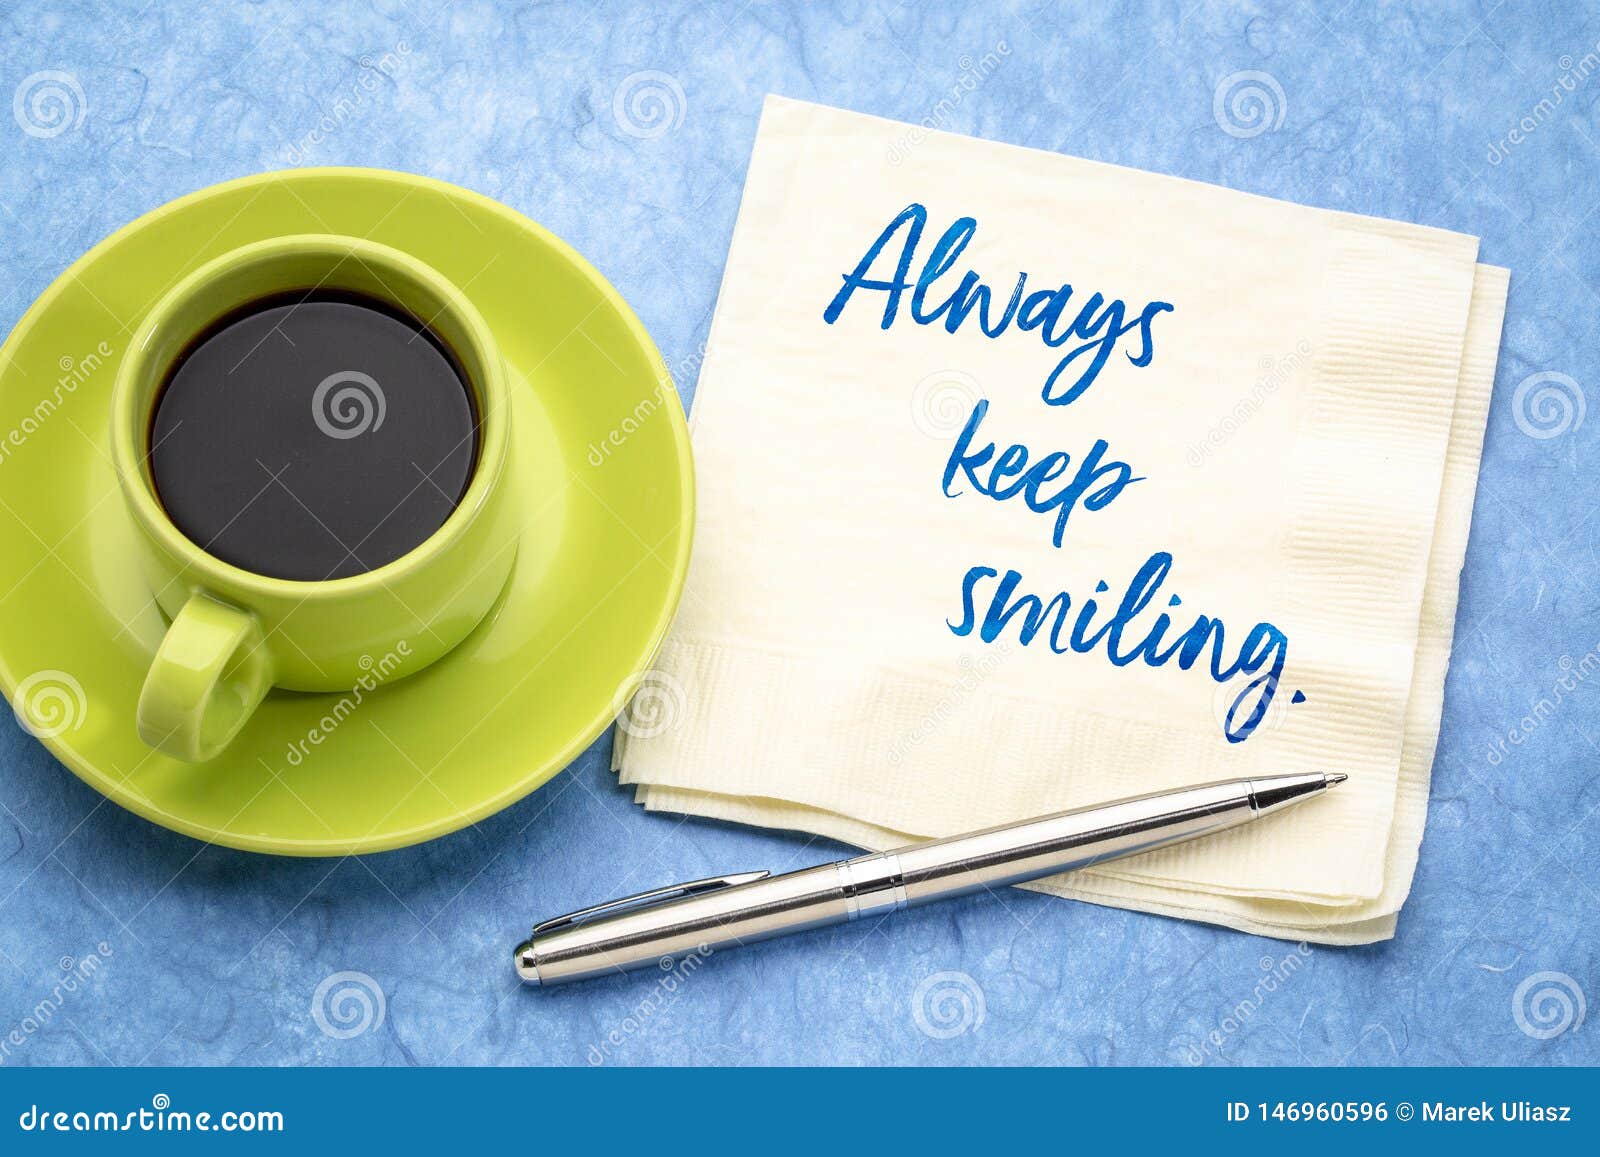 Always Keep Smiling Text on Napkin Stock Photo - Image of ...